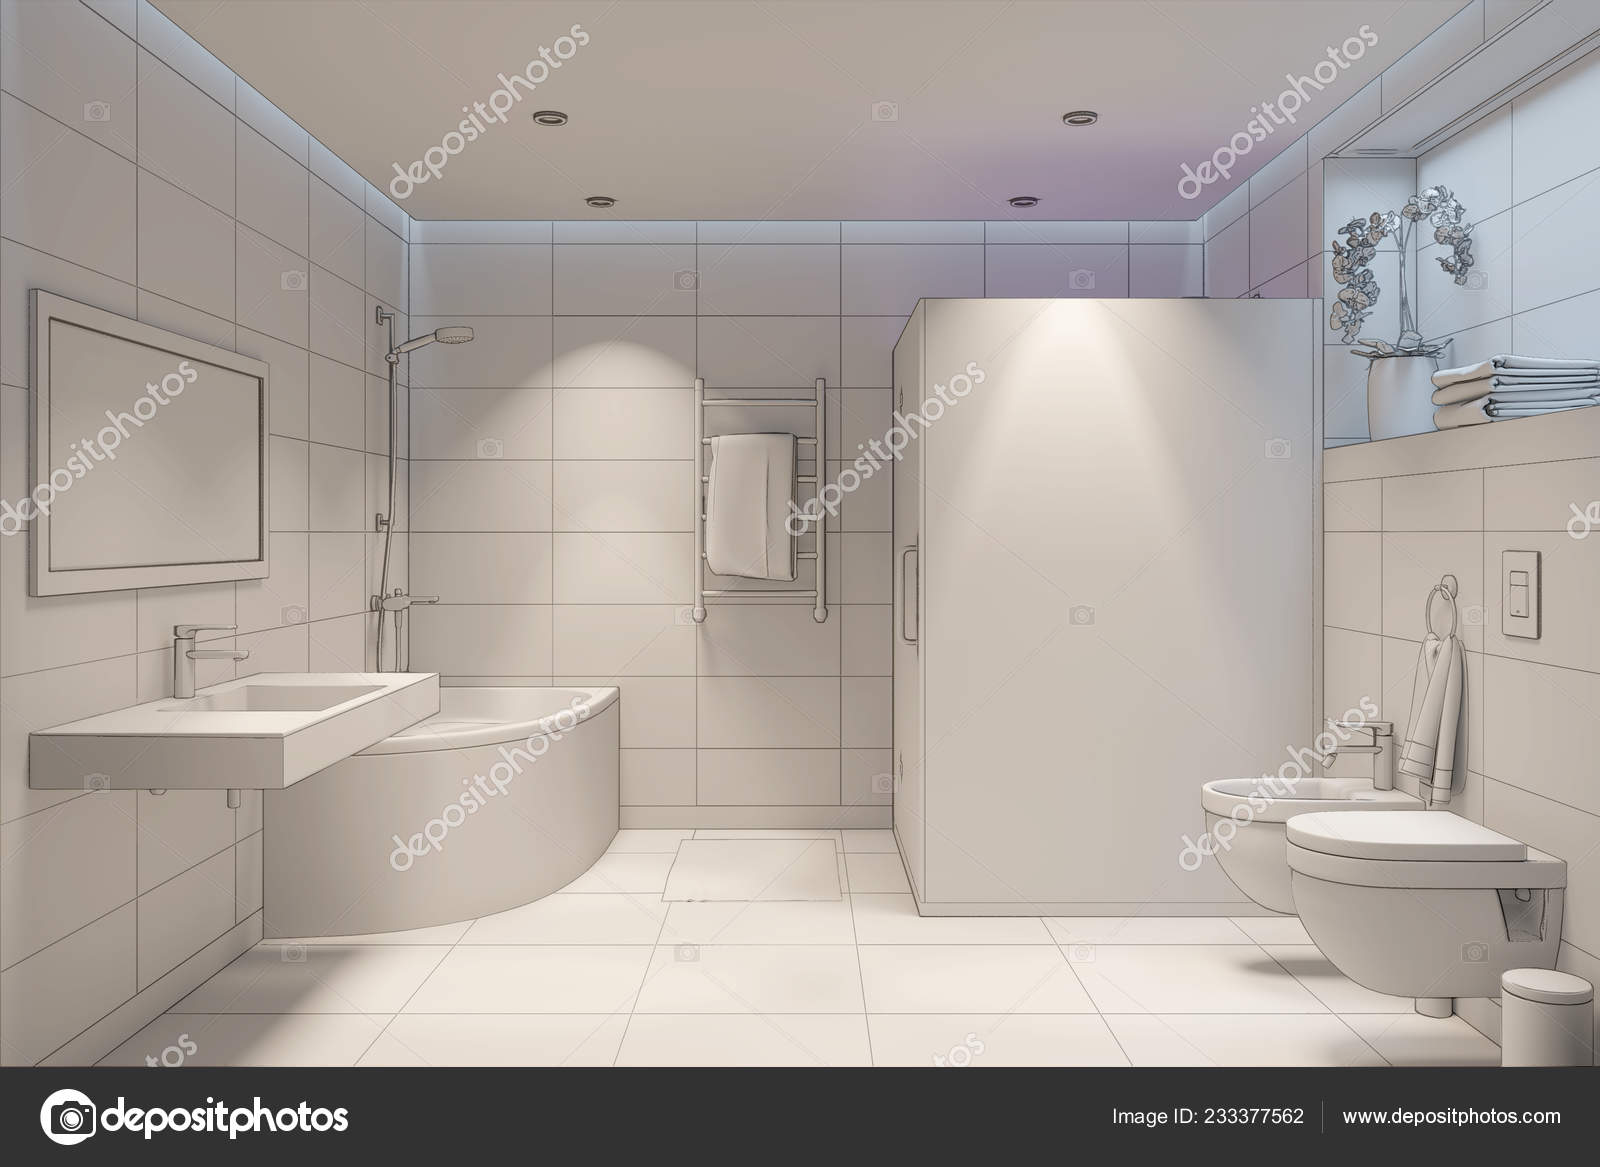 Illustration White Shower Room Overlay Drawing Stock Photo